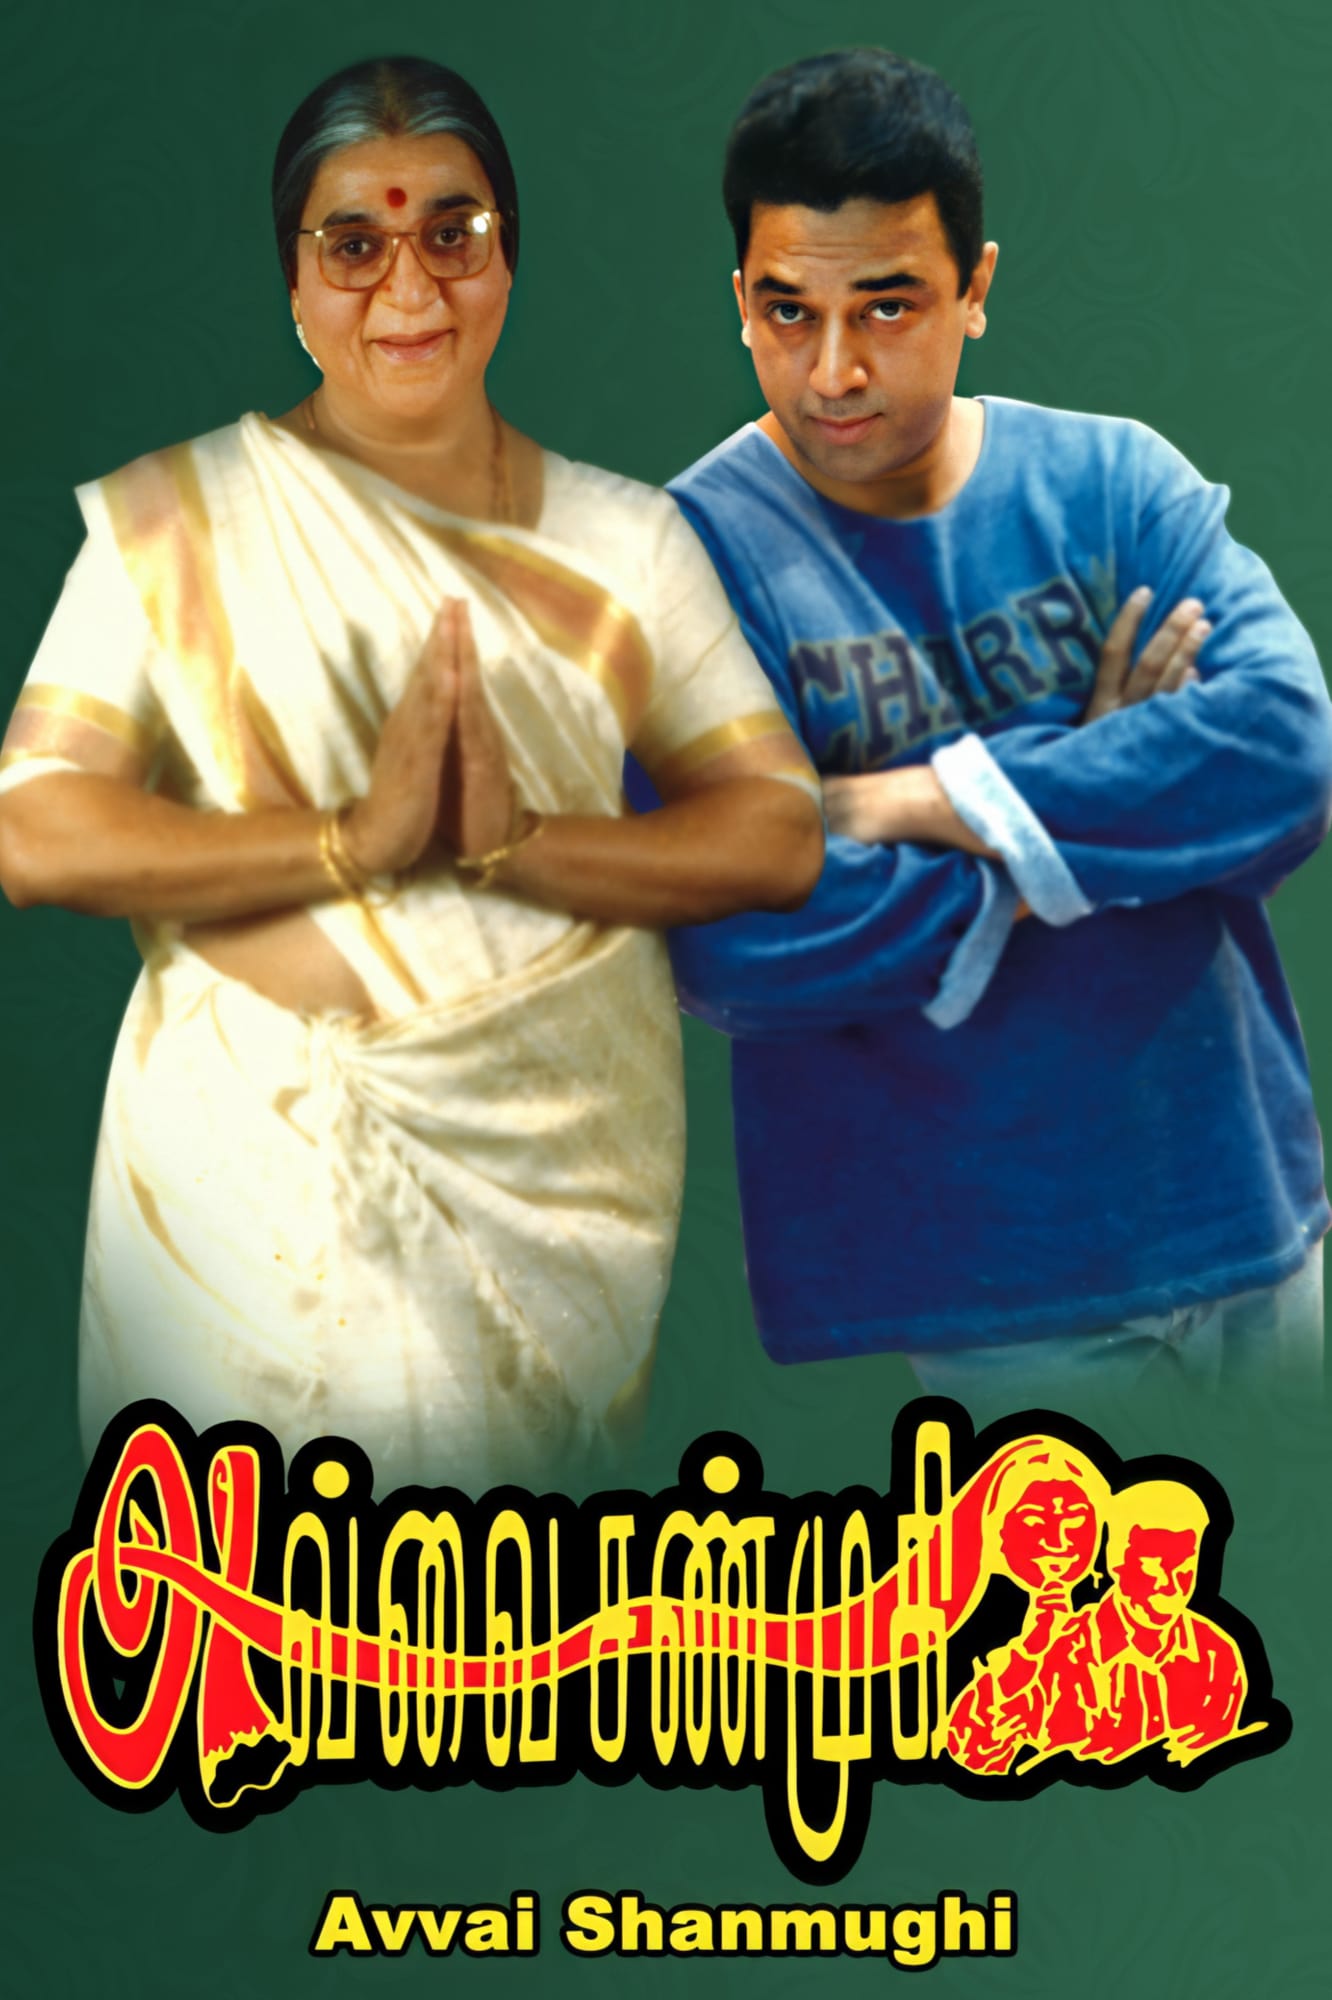 Poster for the movie "Avvai Shanmugi"